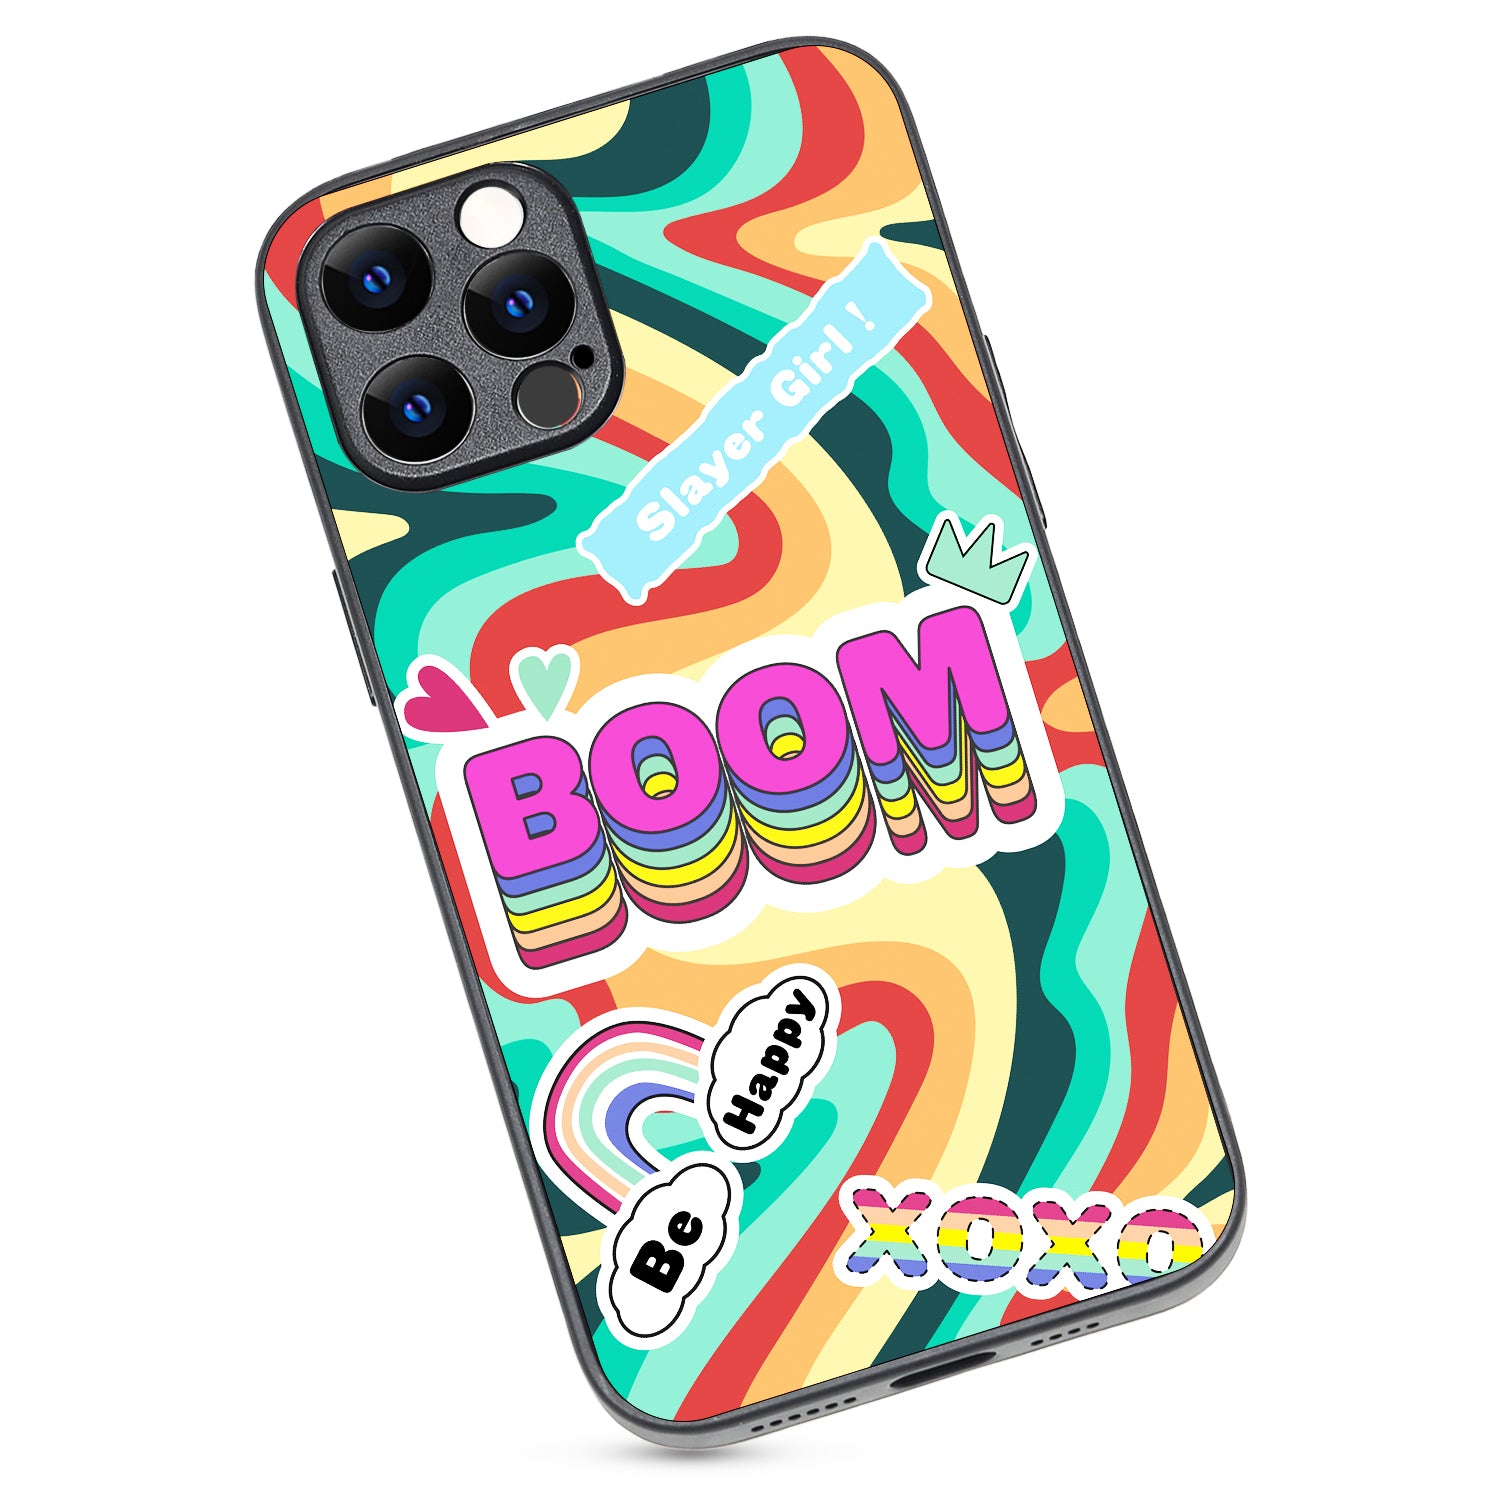 Boom Women Empowerment iPhone 12 Pro Max Case